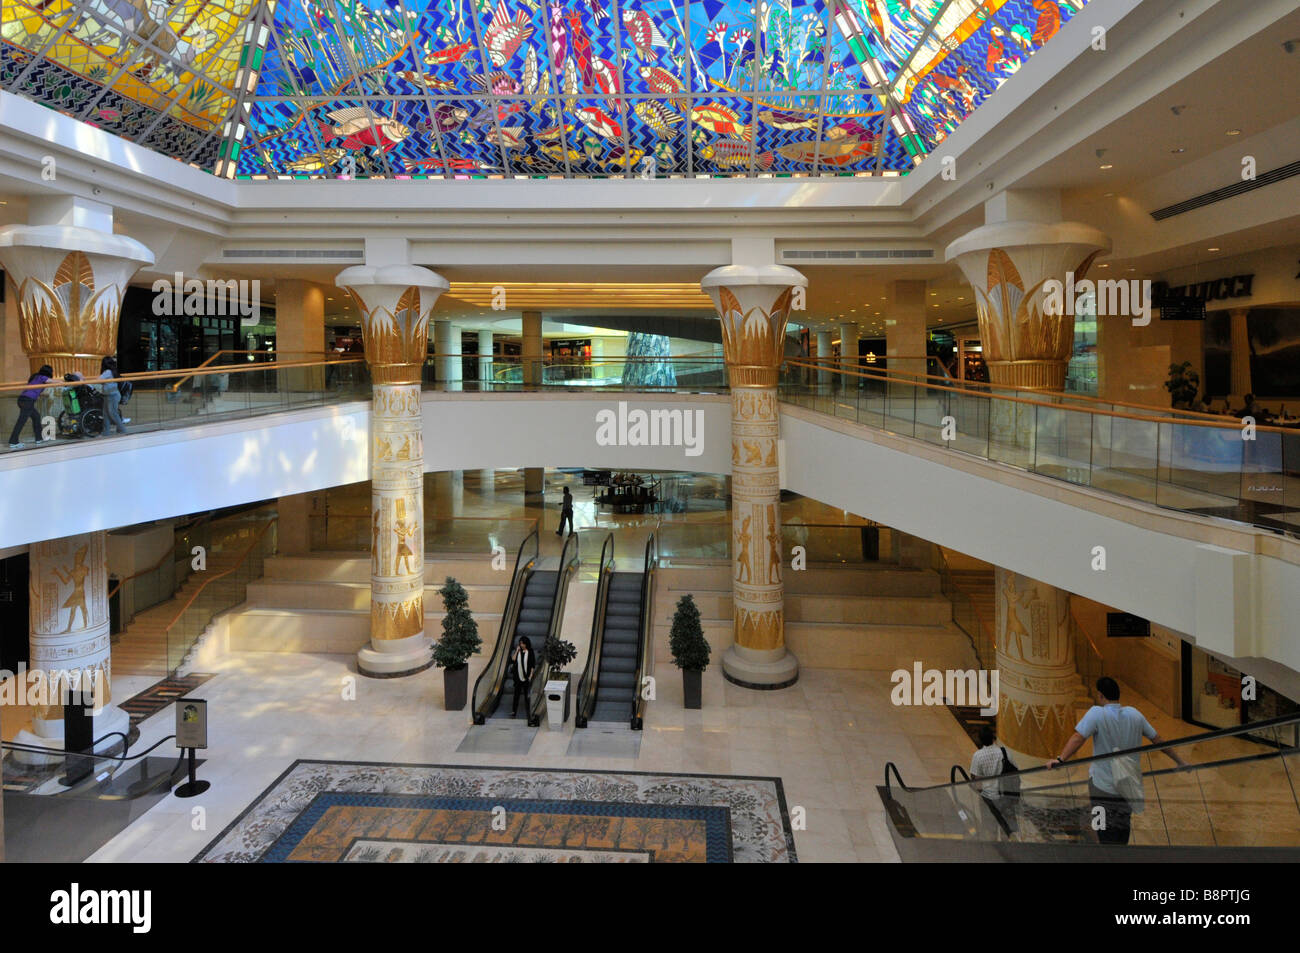 Dubai Wafi shopping mall building interior with Egyptian pyramid style stained glass roof above escalator hallway United Arab Emirates UAE Stock Photo